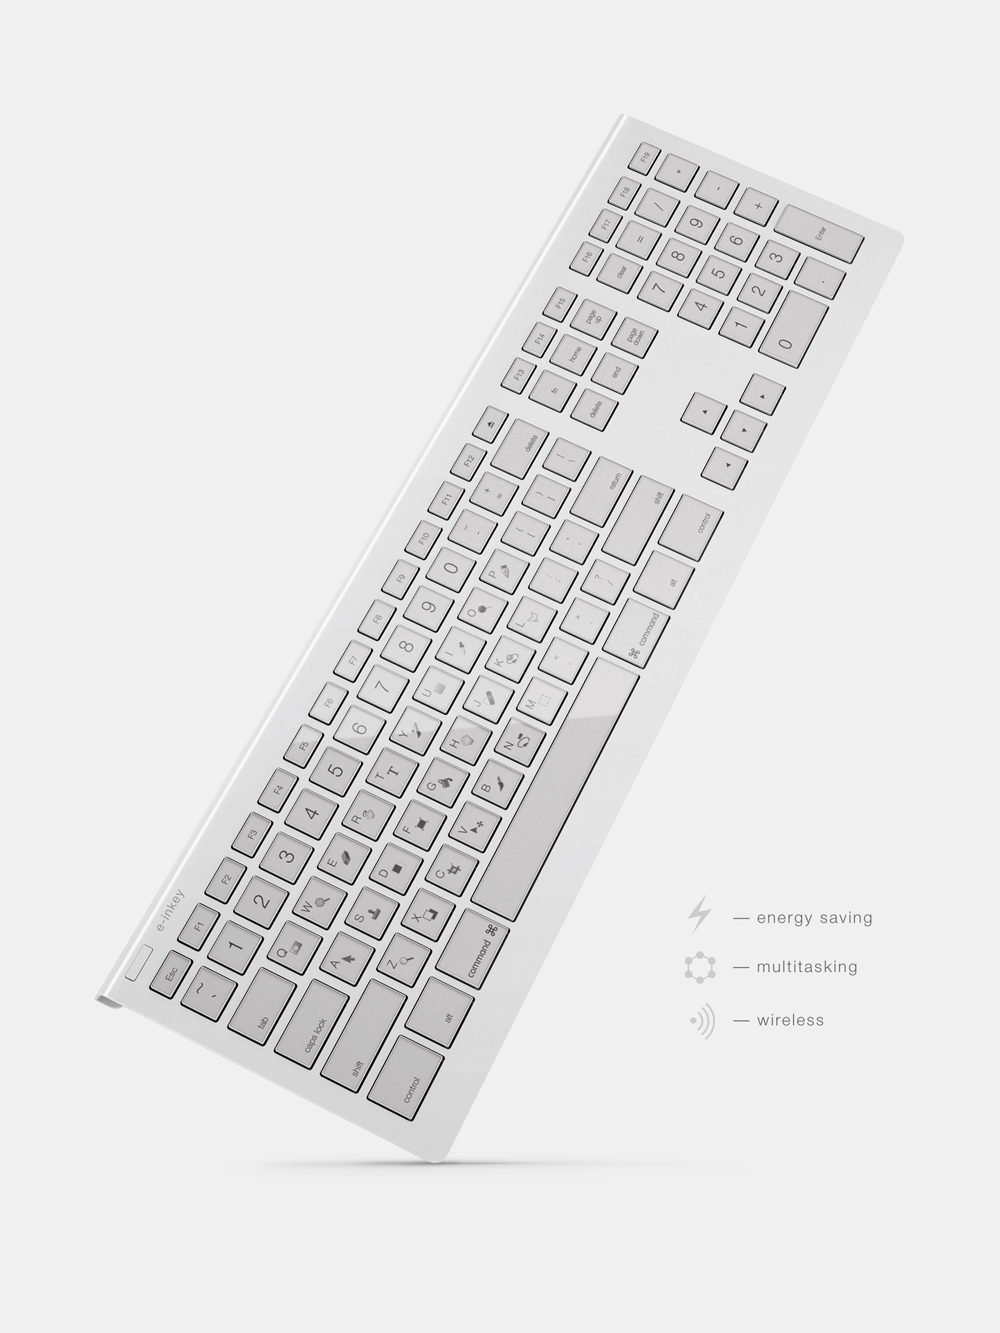 keyboard Computer e-ink multitasking  photoshop Illustrator Office